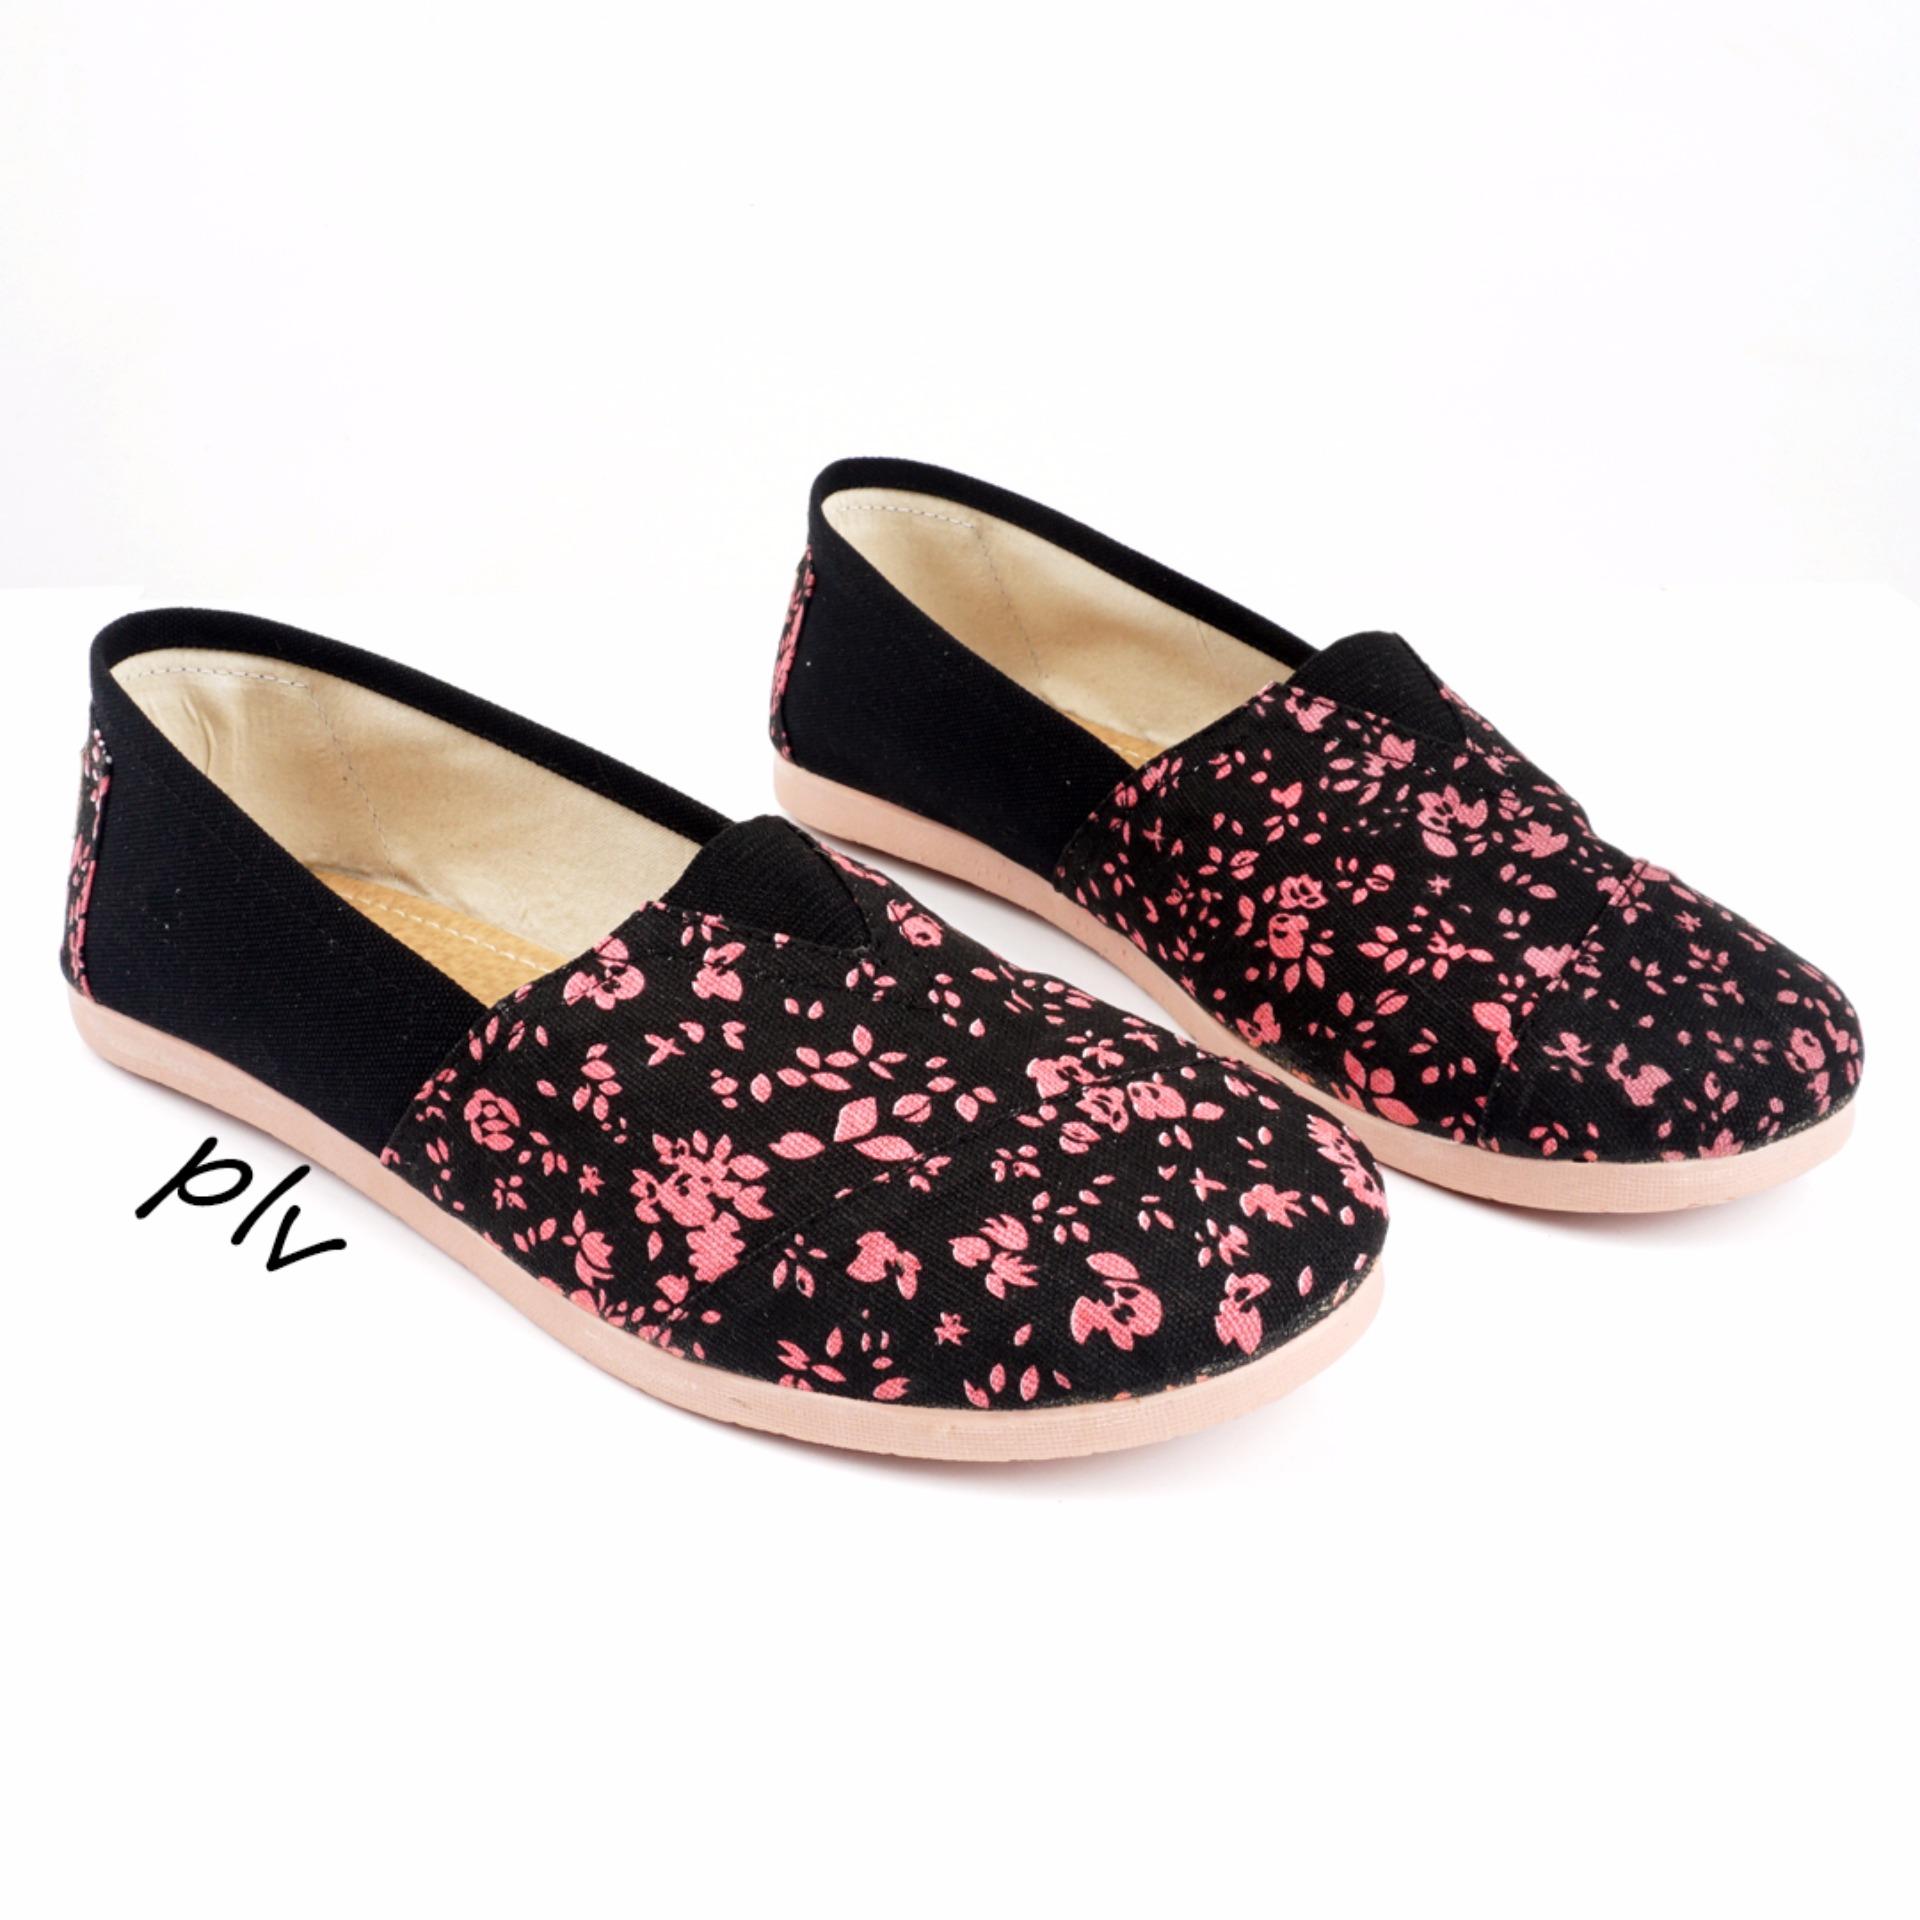 JUAL Sepatu Wanita Flat Shoes Slip On Kanvas NS91 Flowery - Hitam